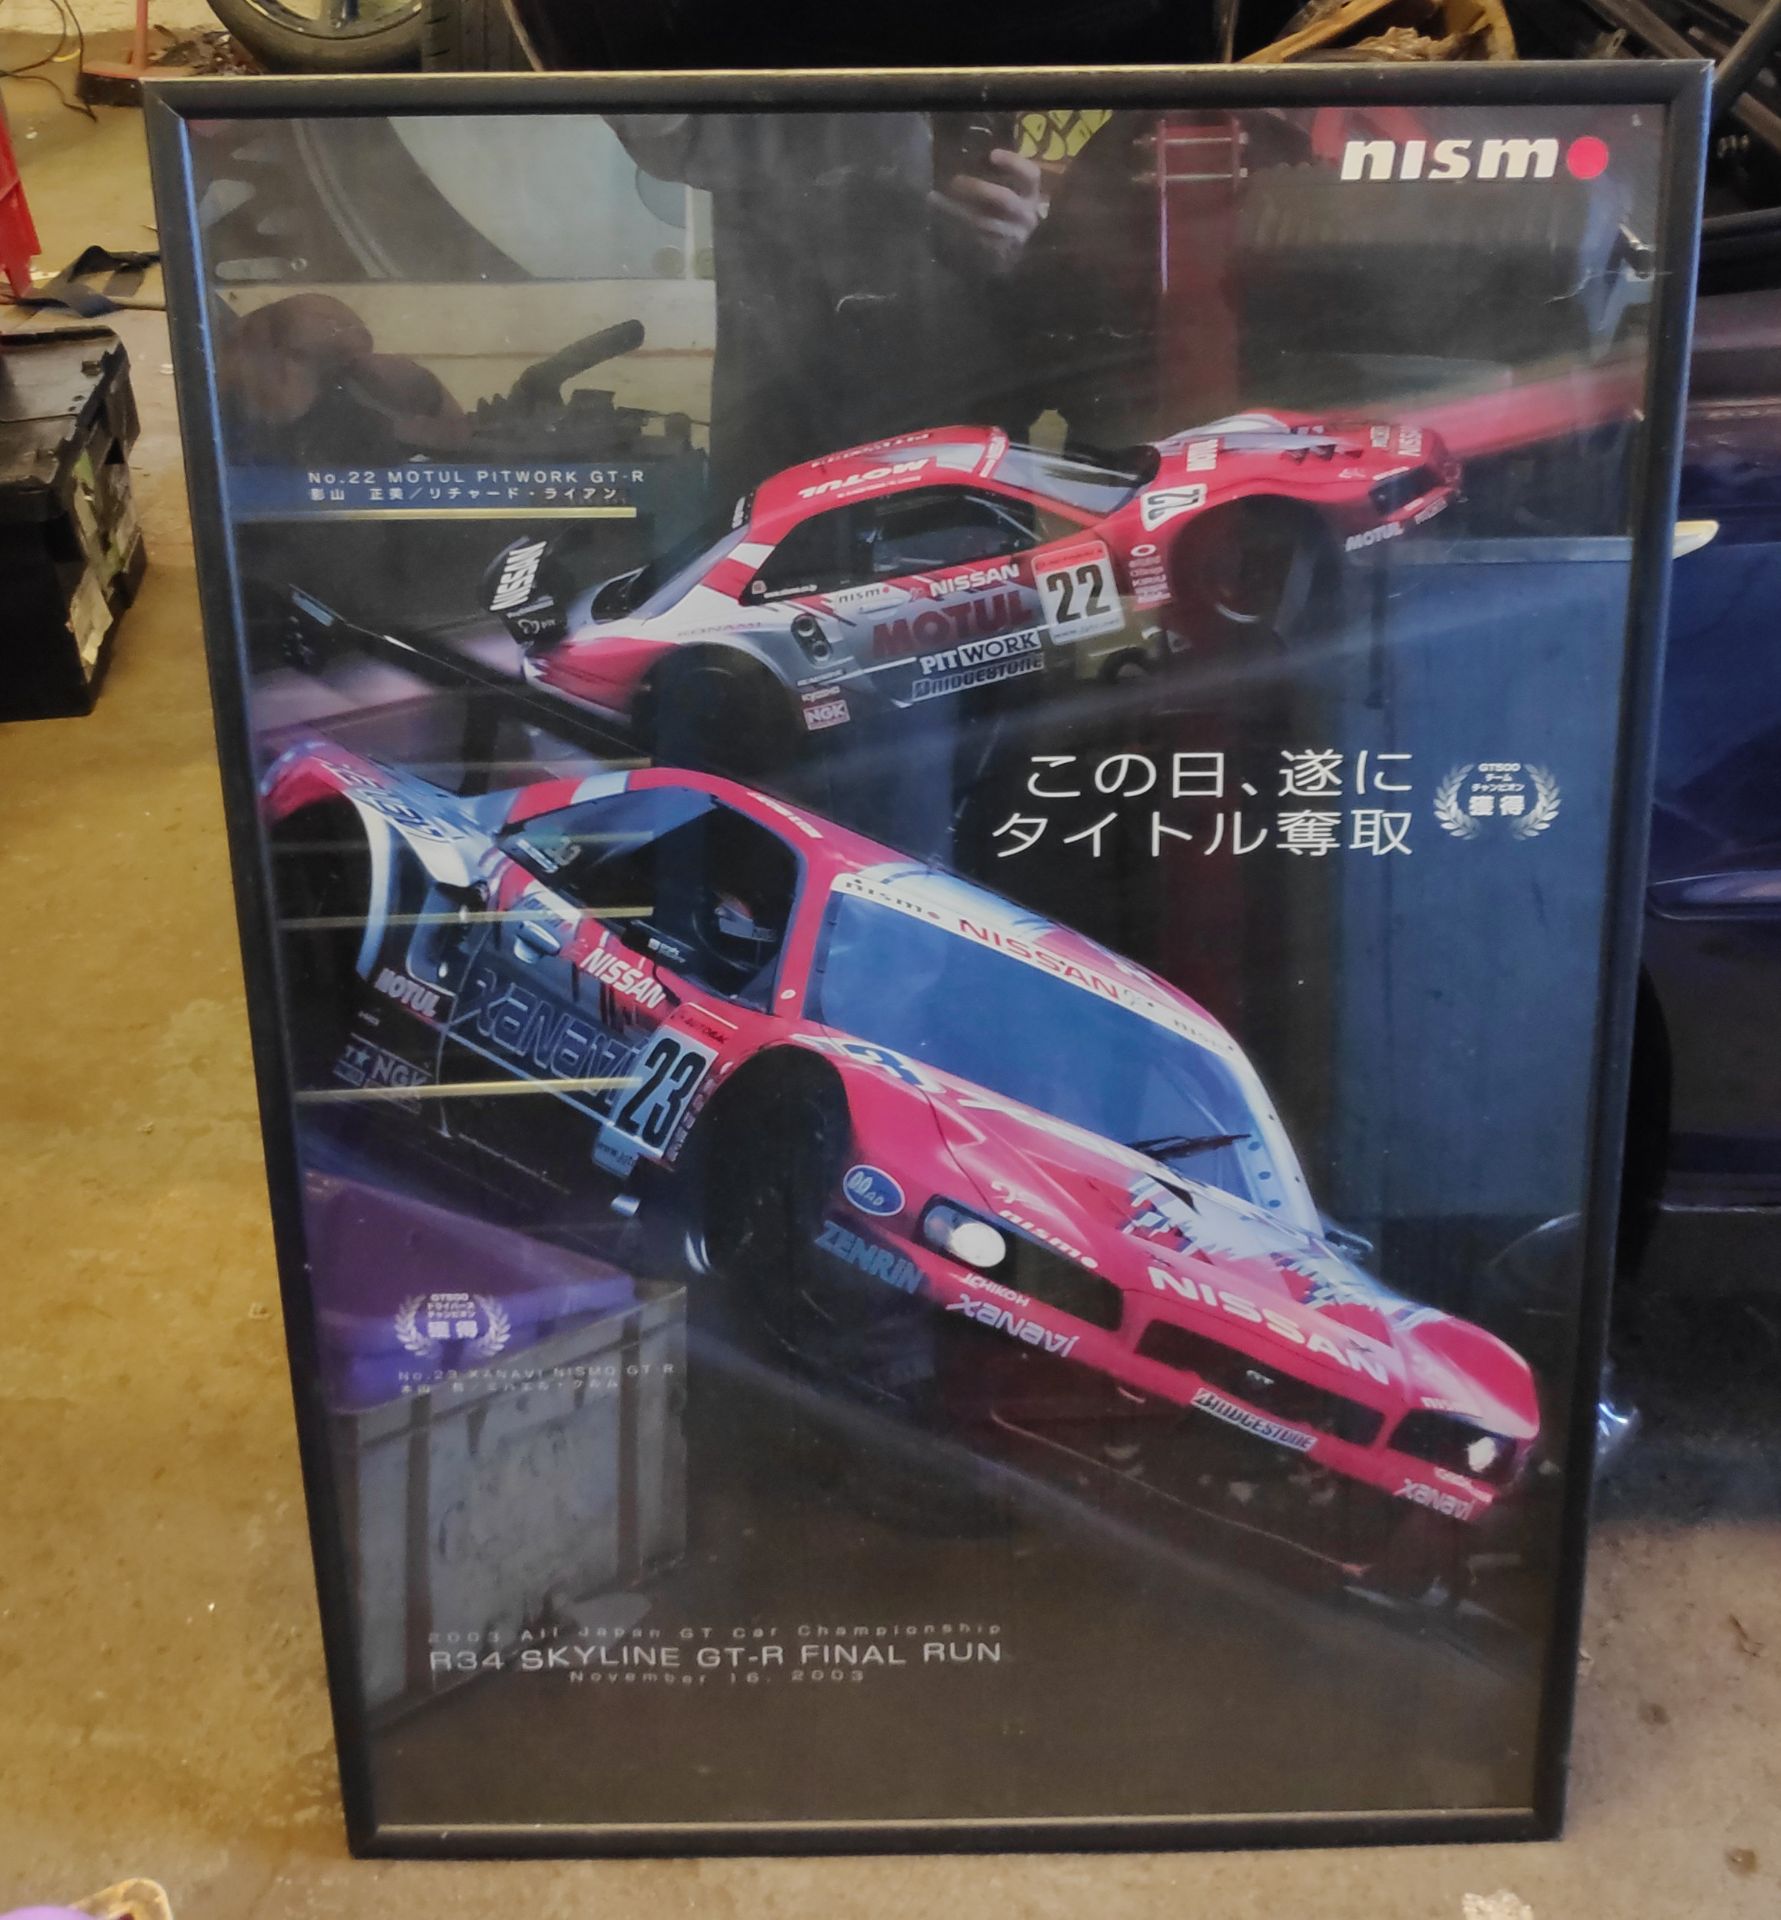 1 x Large Framed Nismo Motul Nissan Skyline R34 GT-R Poster - CL682 - Location: Bedford - Image 4 of 9